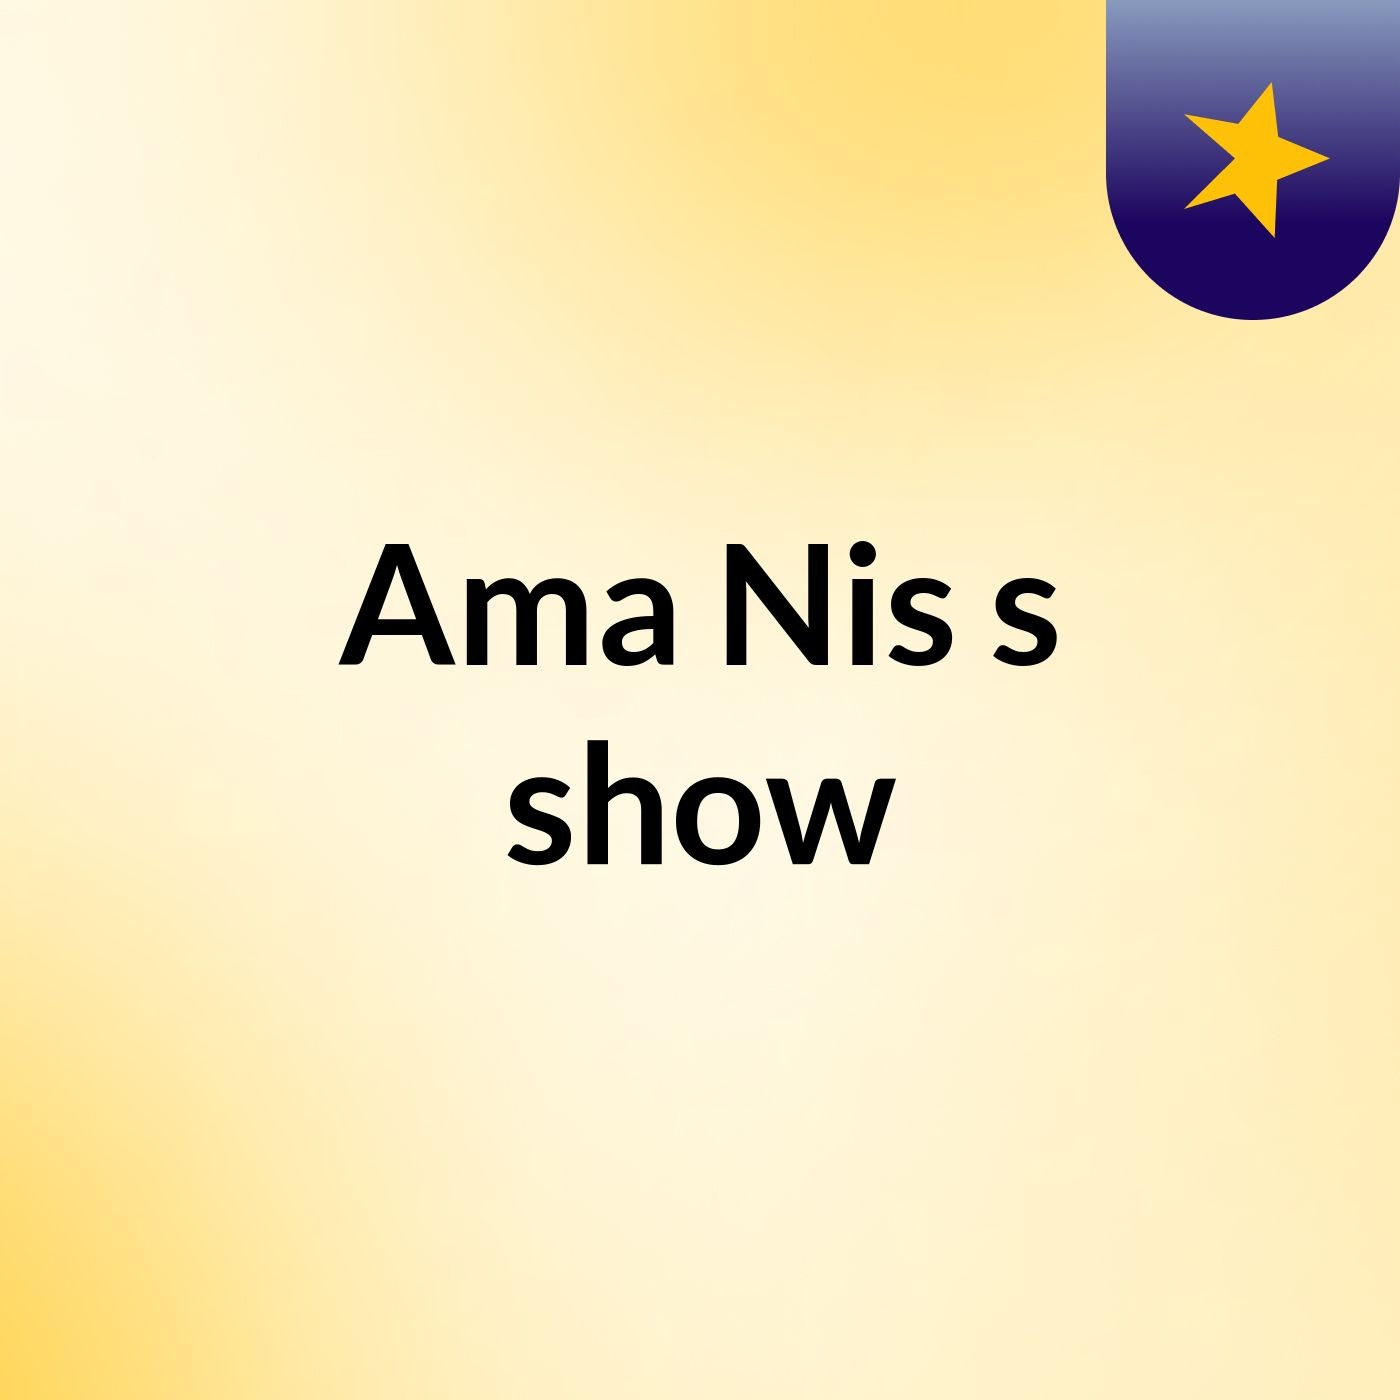 Ama Nis's show